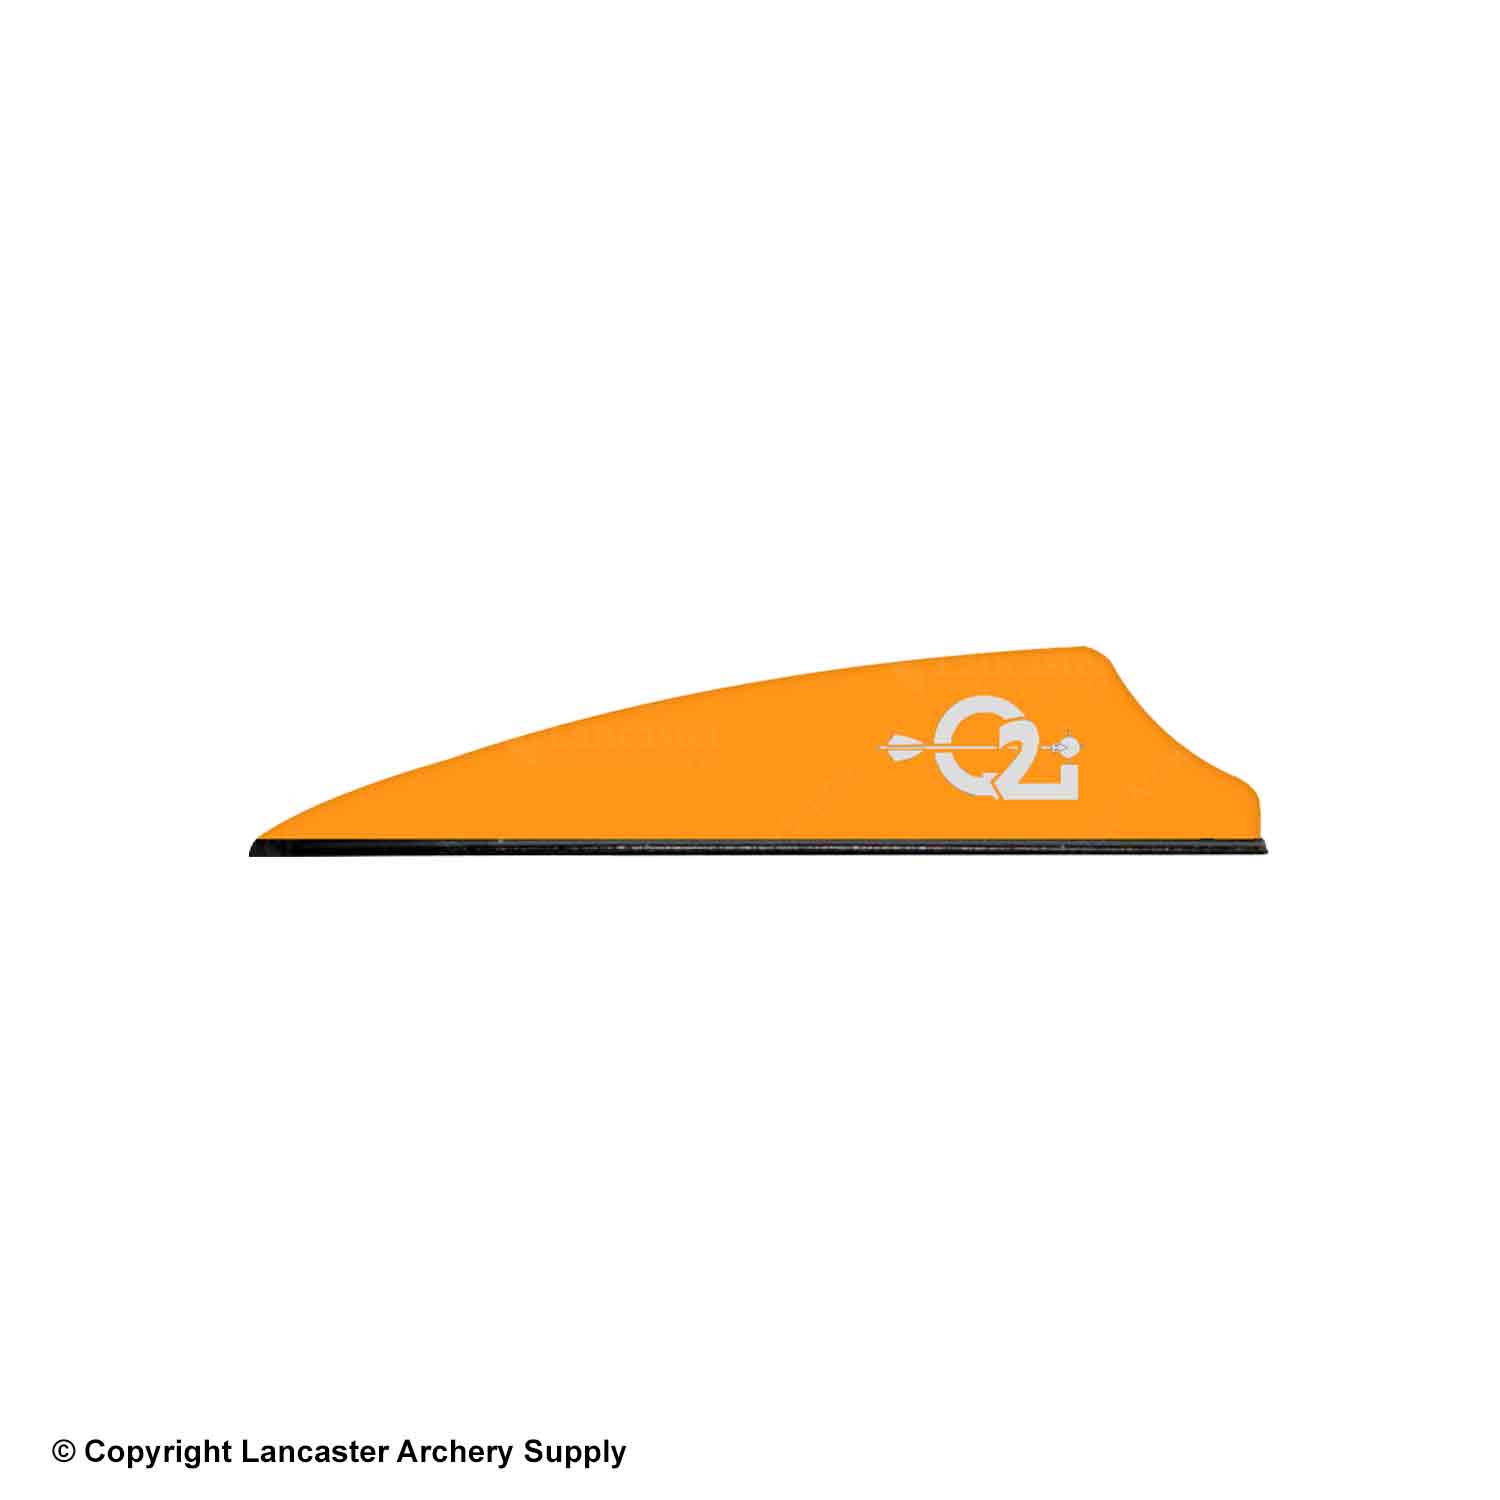 Shield cut vane that is orange, has a black base, and silver Q2i logo.